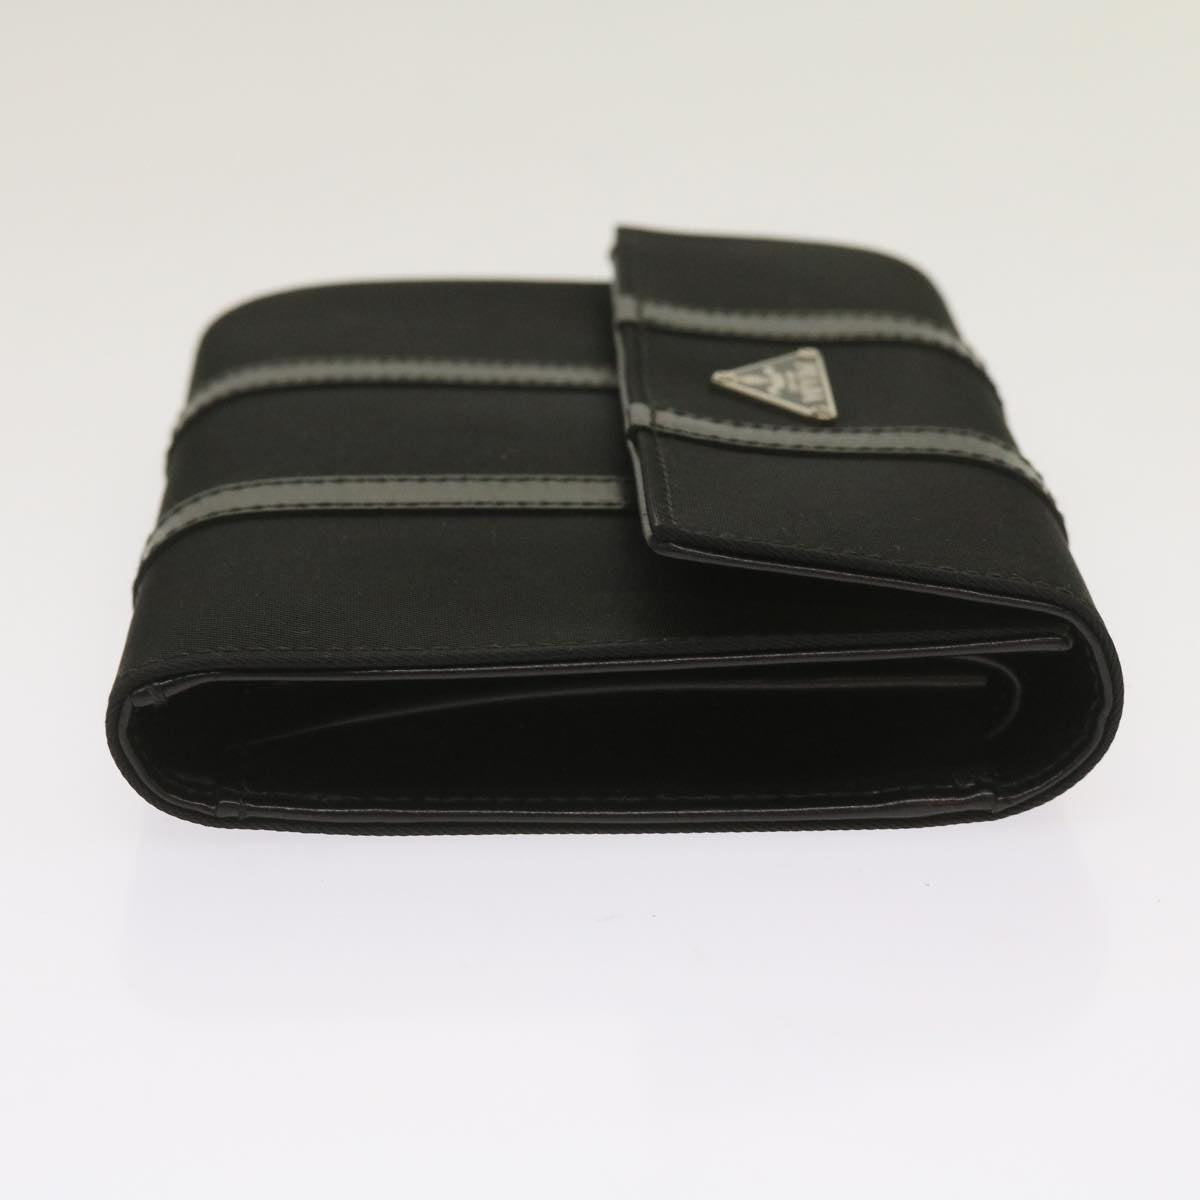 PRADA Wallet Nylon Black Auth bs11938